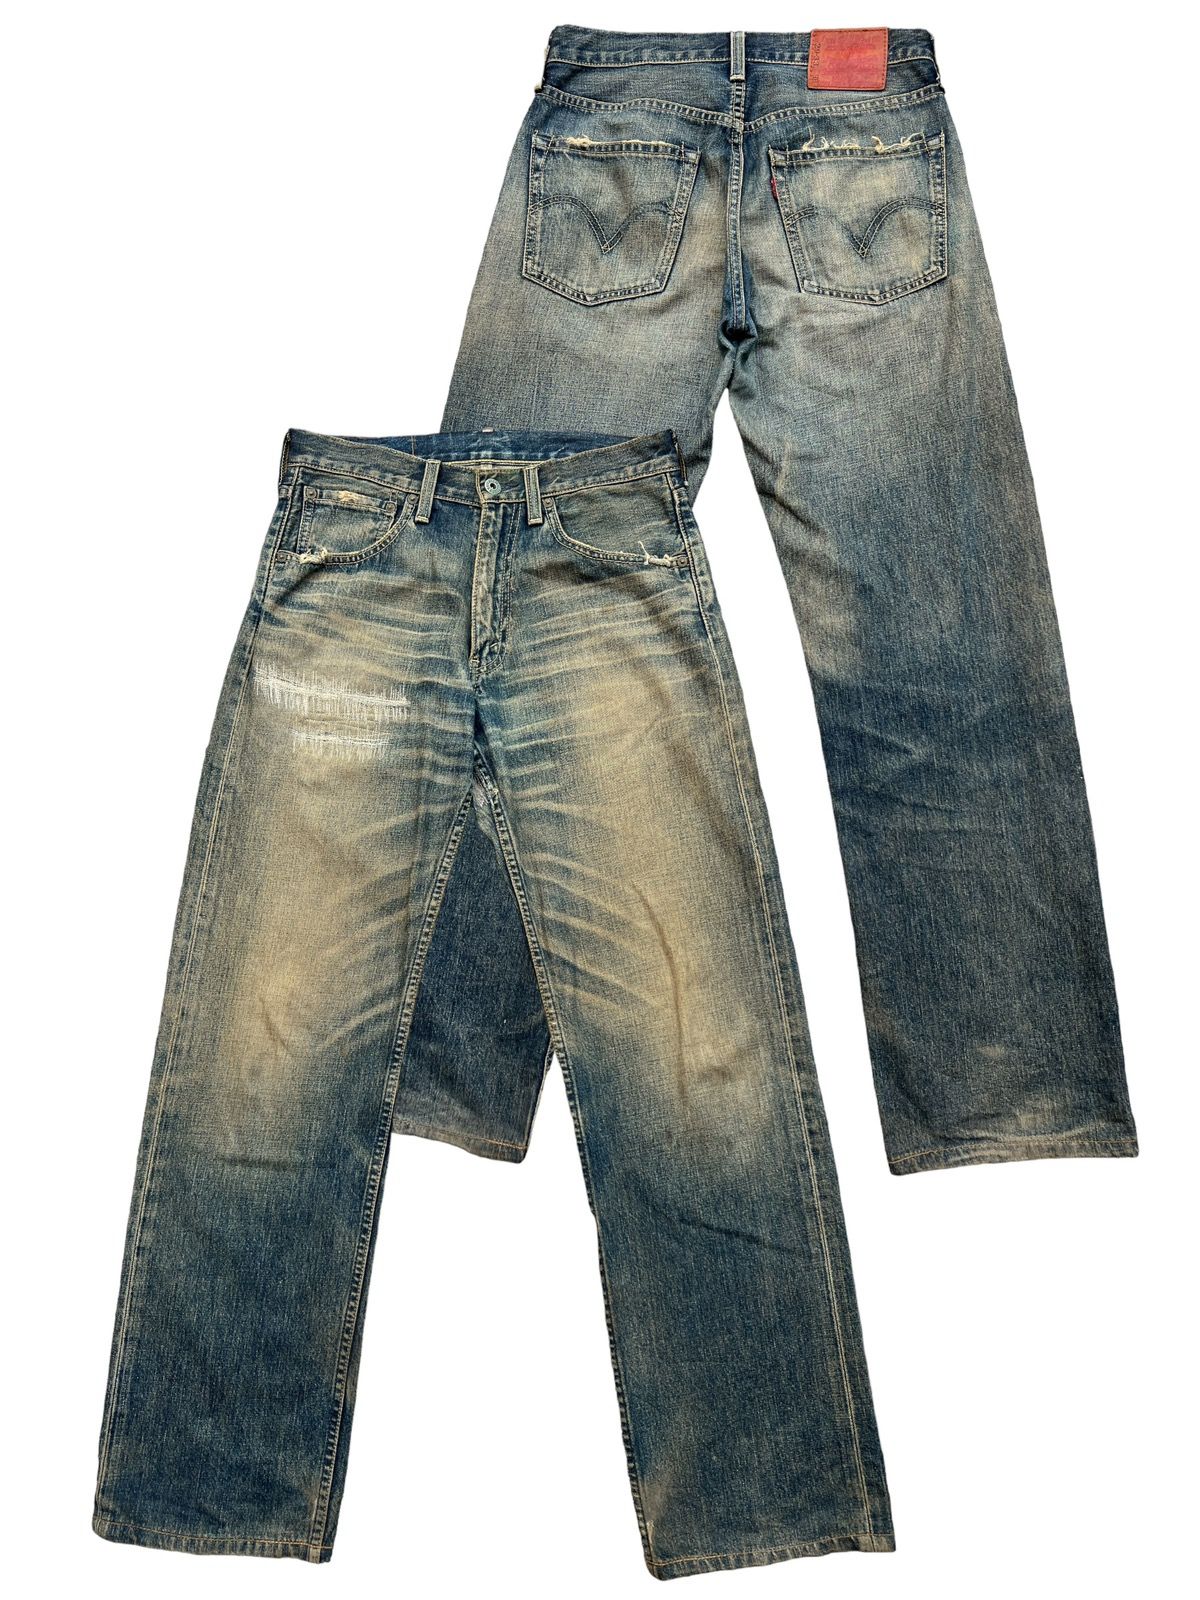 Vintage Levi’s 503 Distressed Rusty Denim Jeans 30x32 - 1